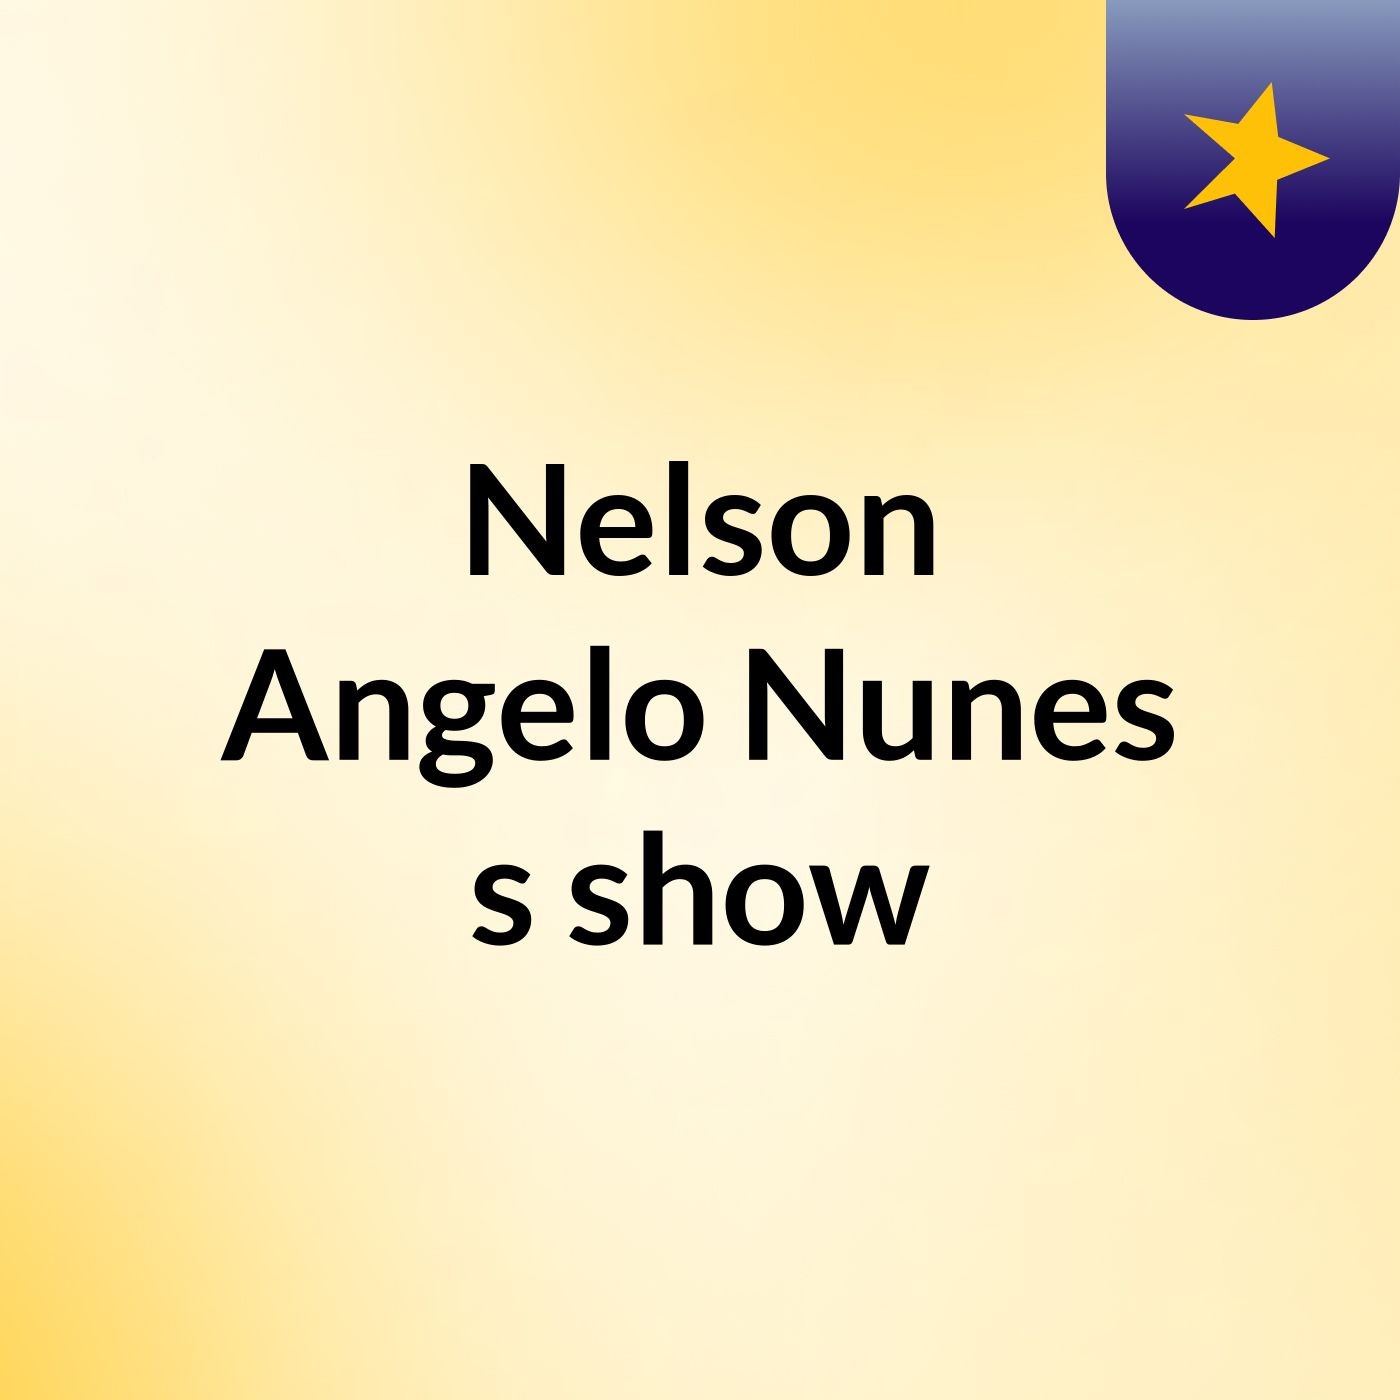 Nelson Angelo Nunes's show